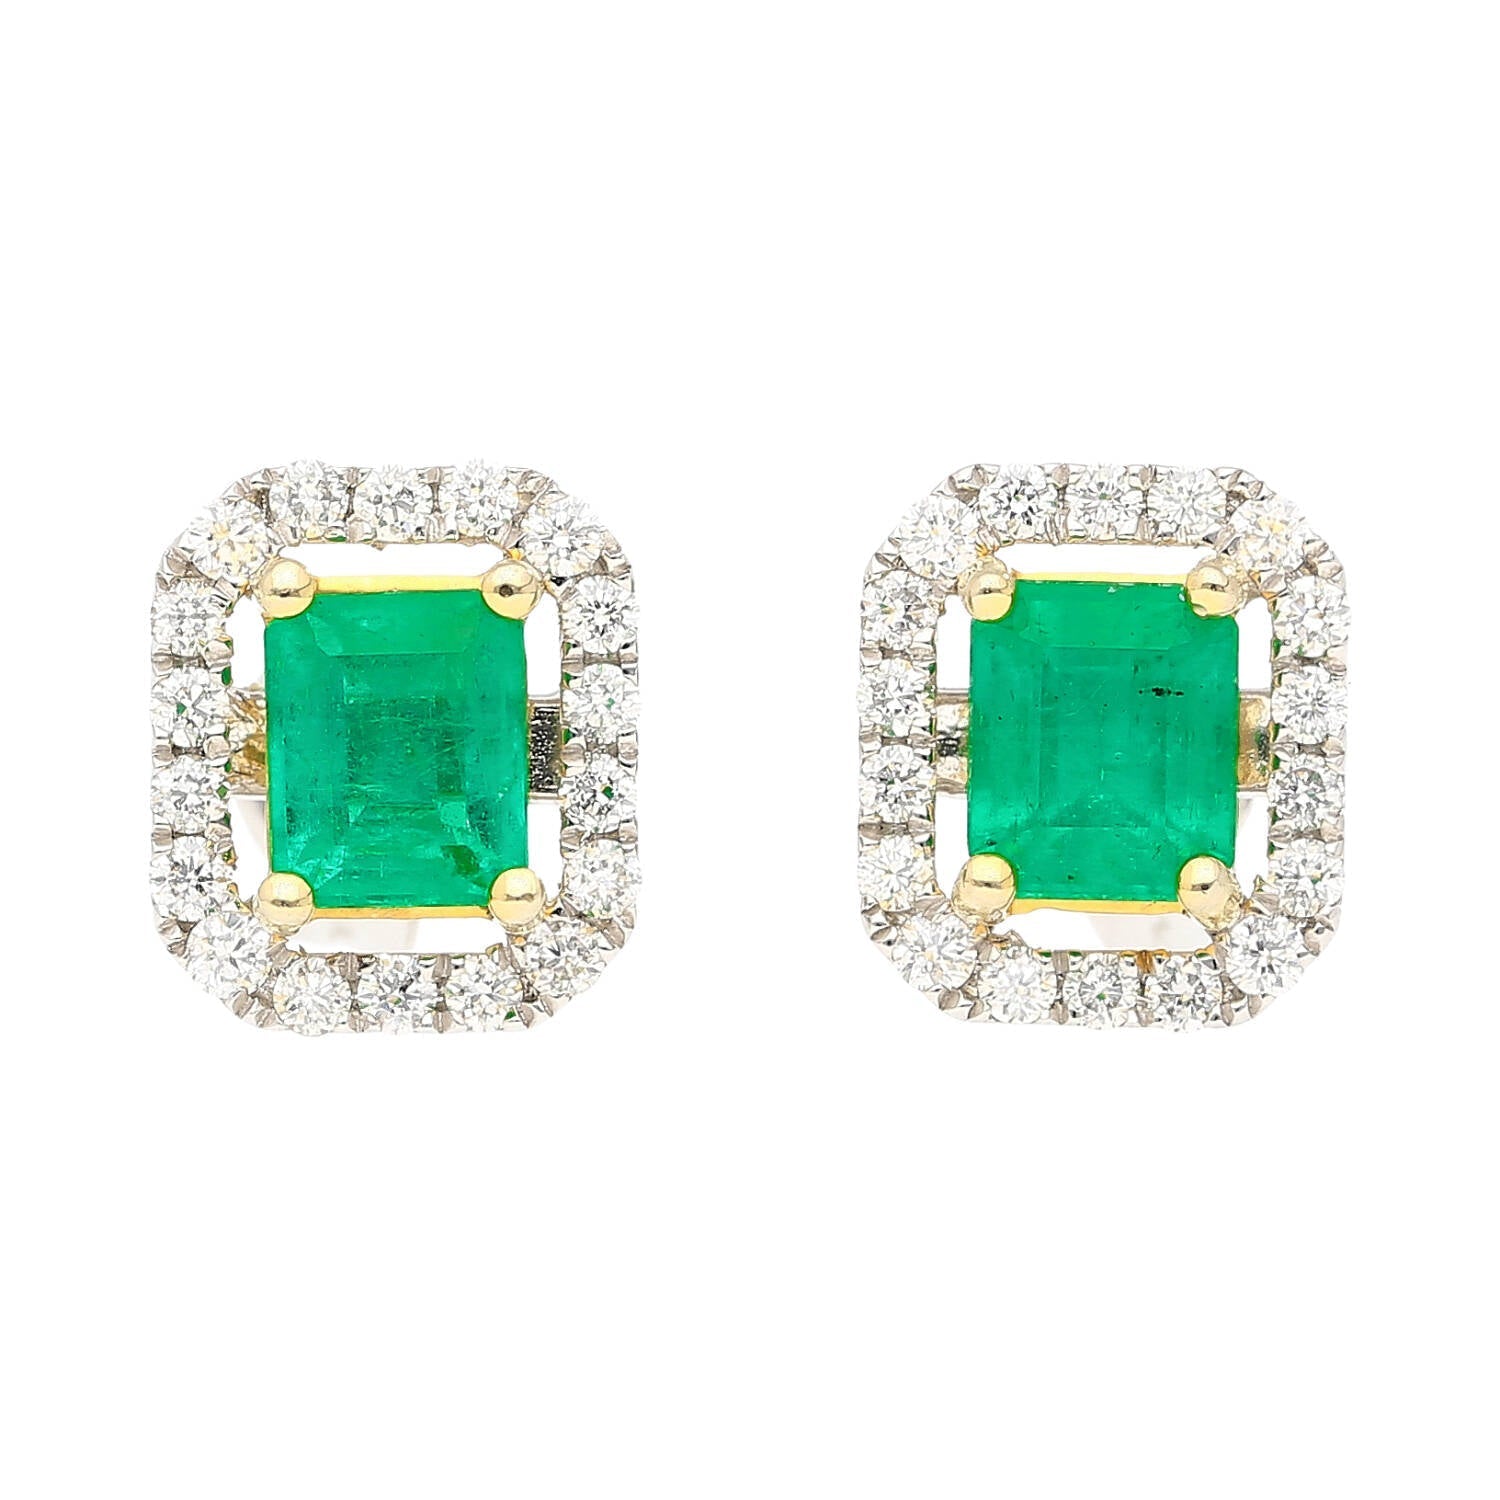 Natural-Emerald-and-Diamond-Halo-Stud-Earrings-in-18K-White-Gold-Earrings.jpg